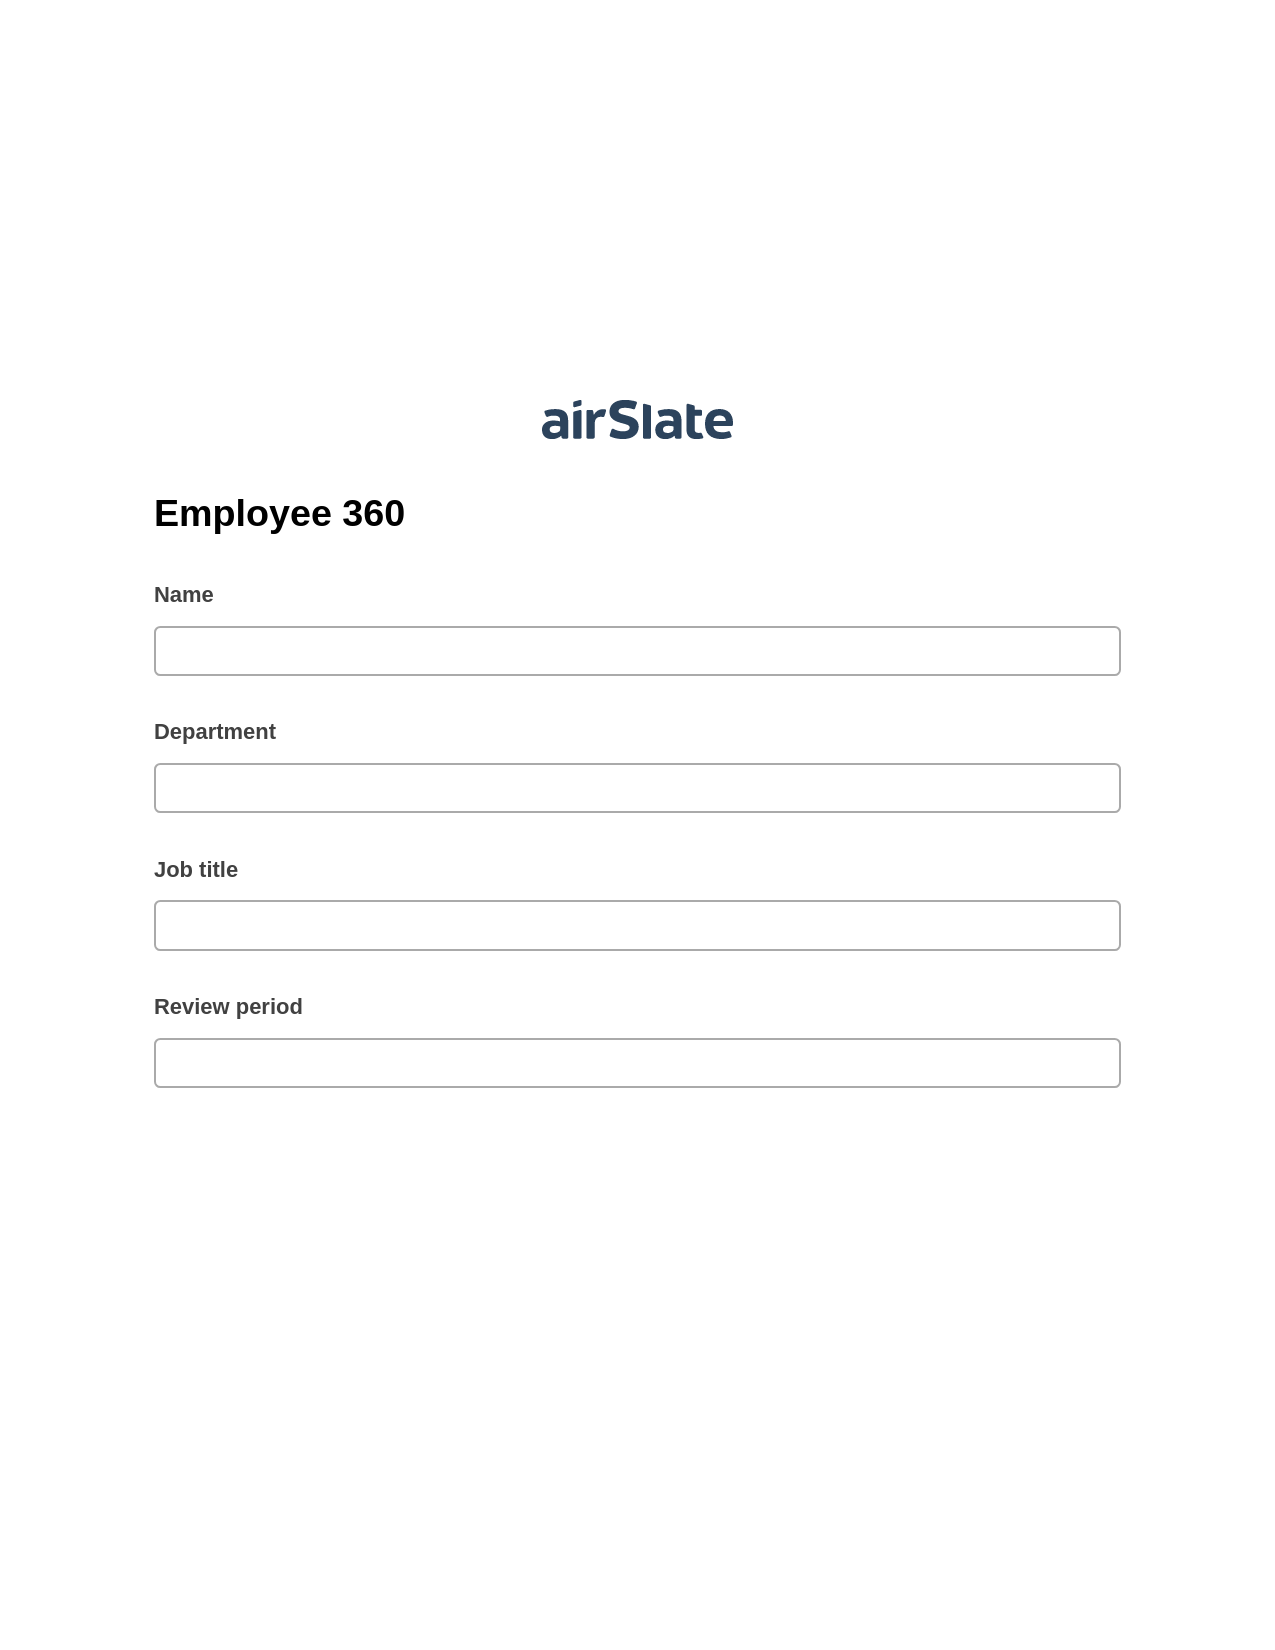 Multirole Employee 360 Pre-fill from MS Dynamics 365 Records, Invoke Salesforce Process Bot, Email Notification Postfinish Bot